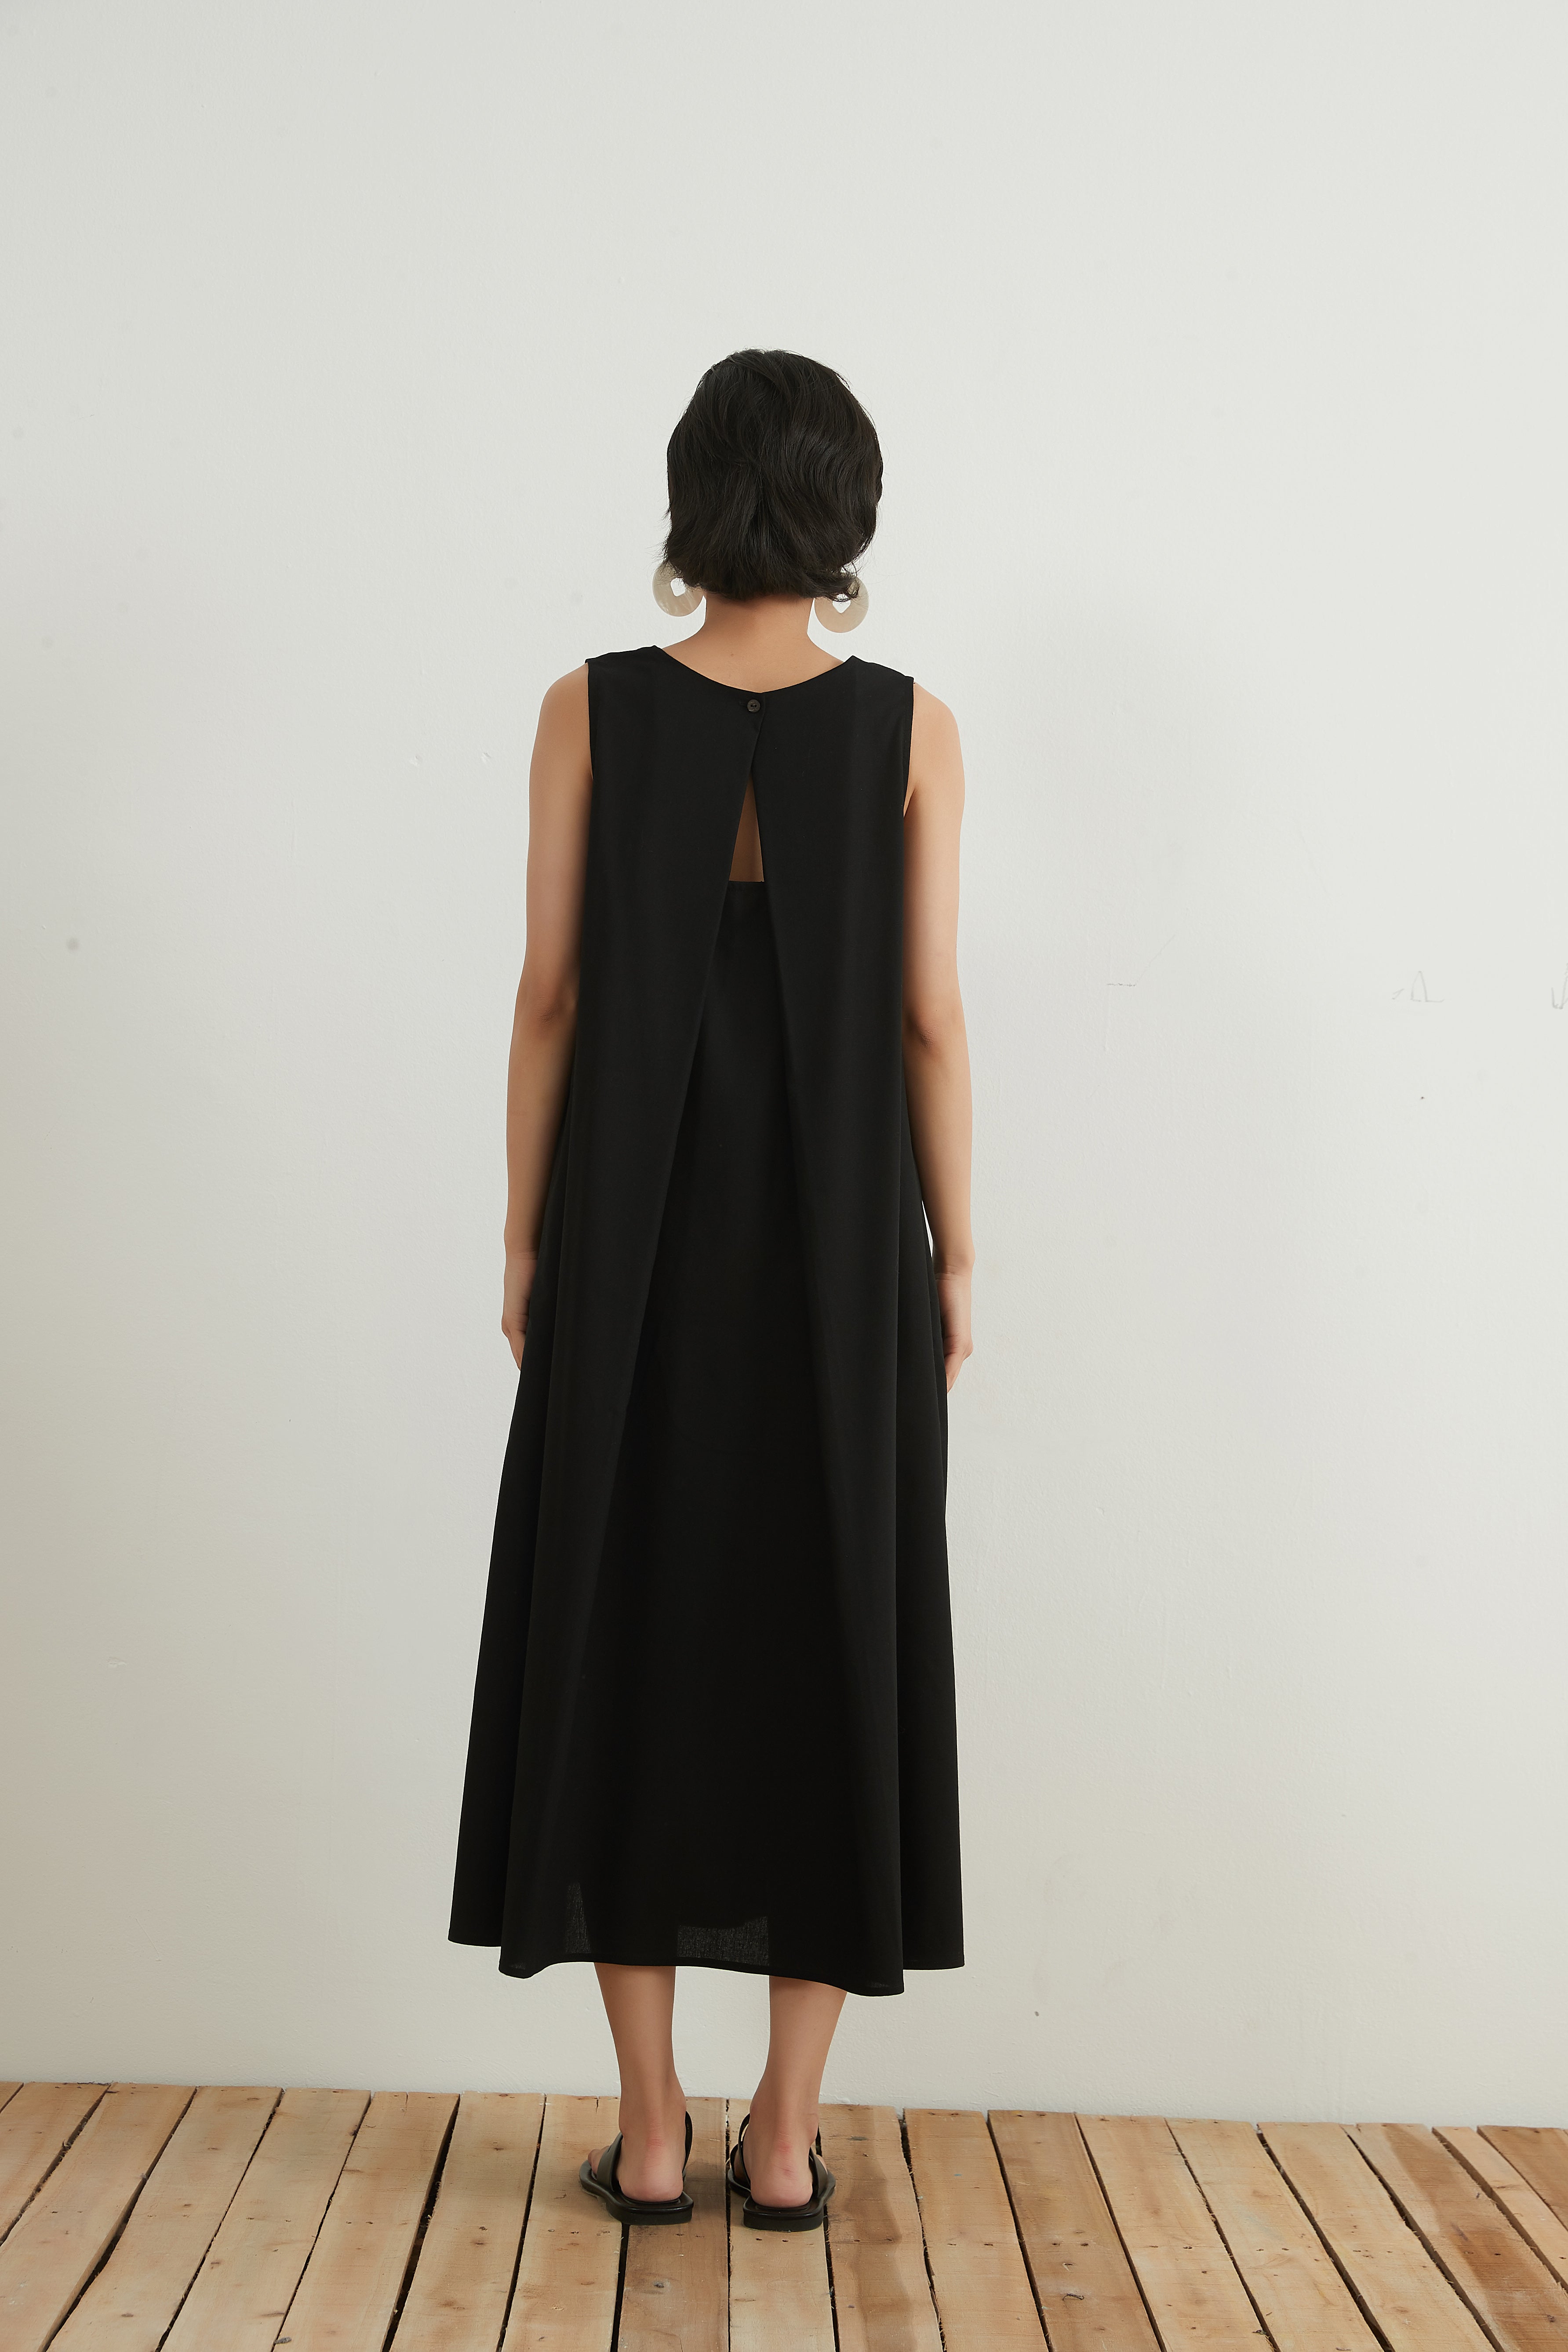 Aldin linen black dress one-piece